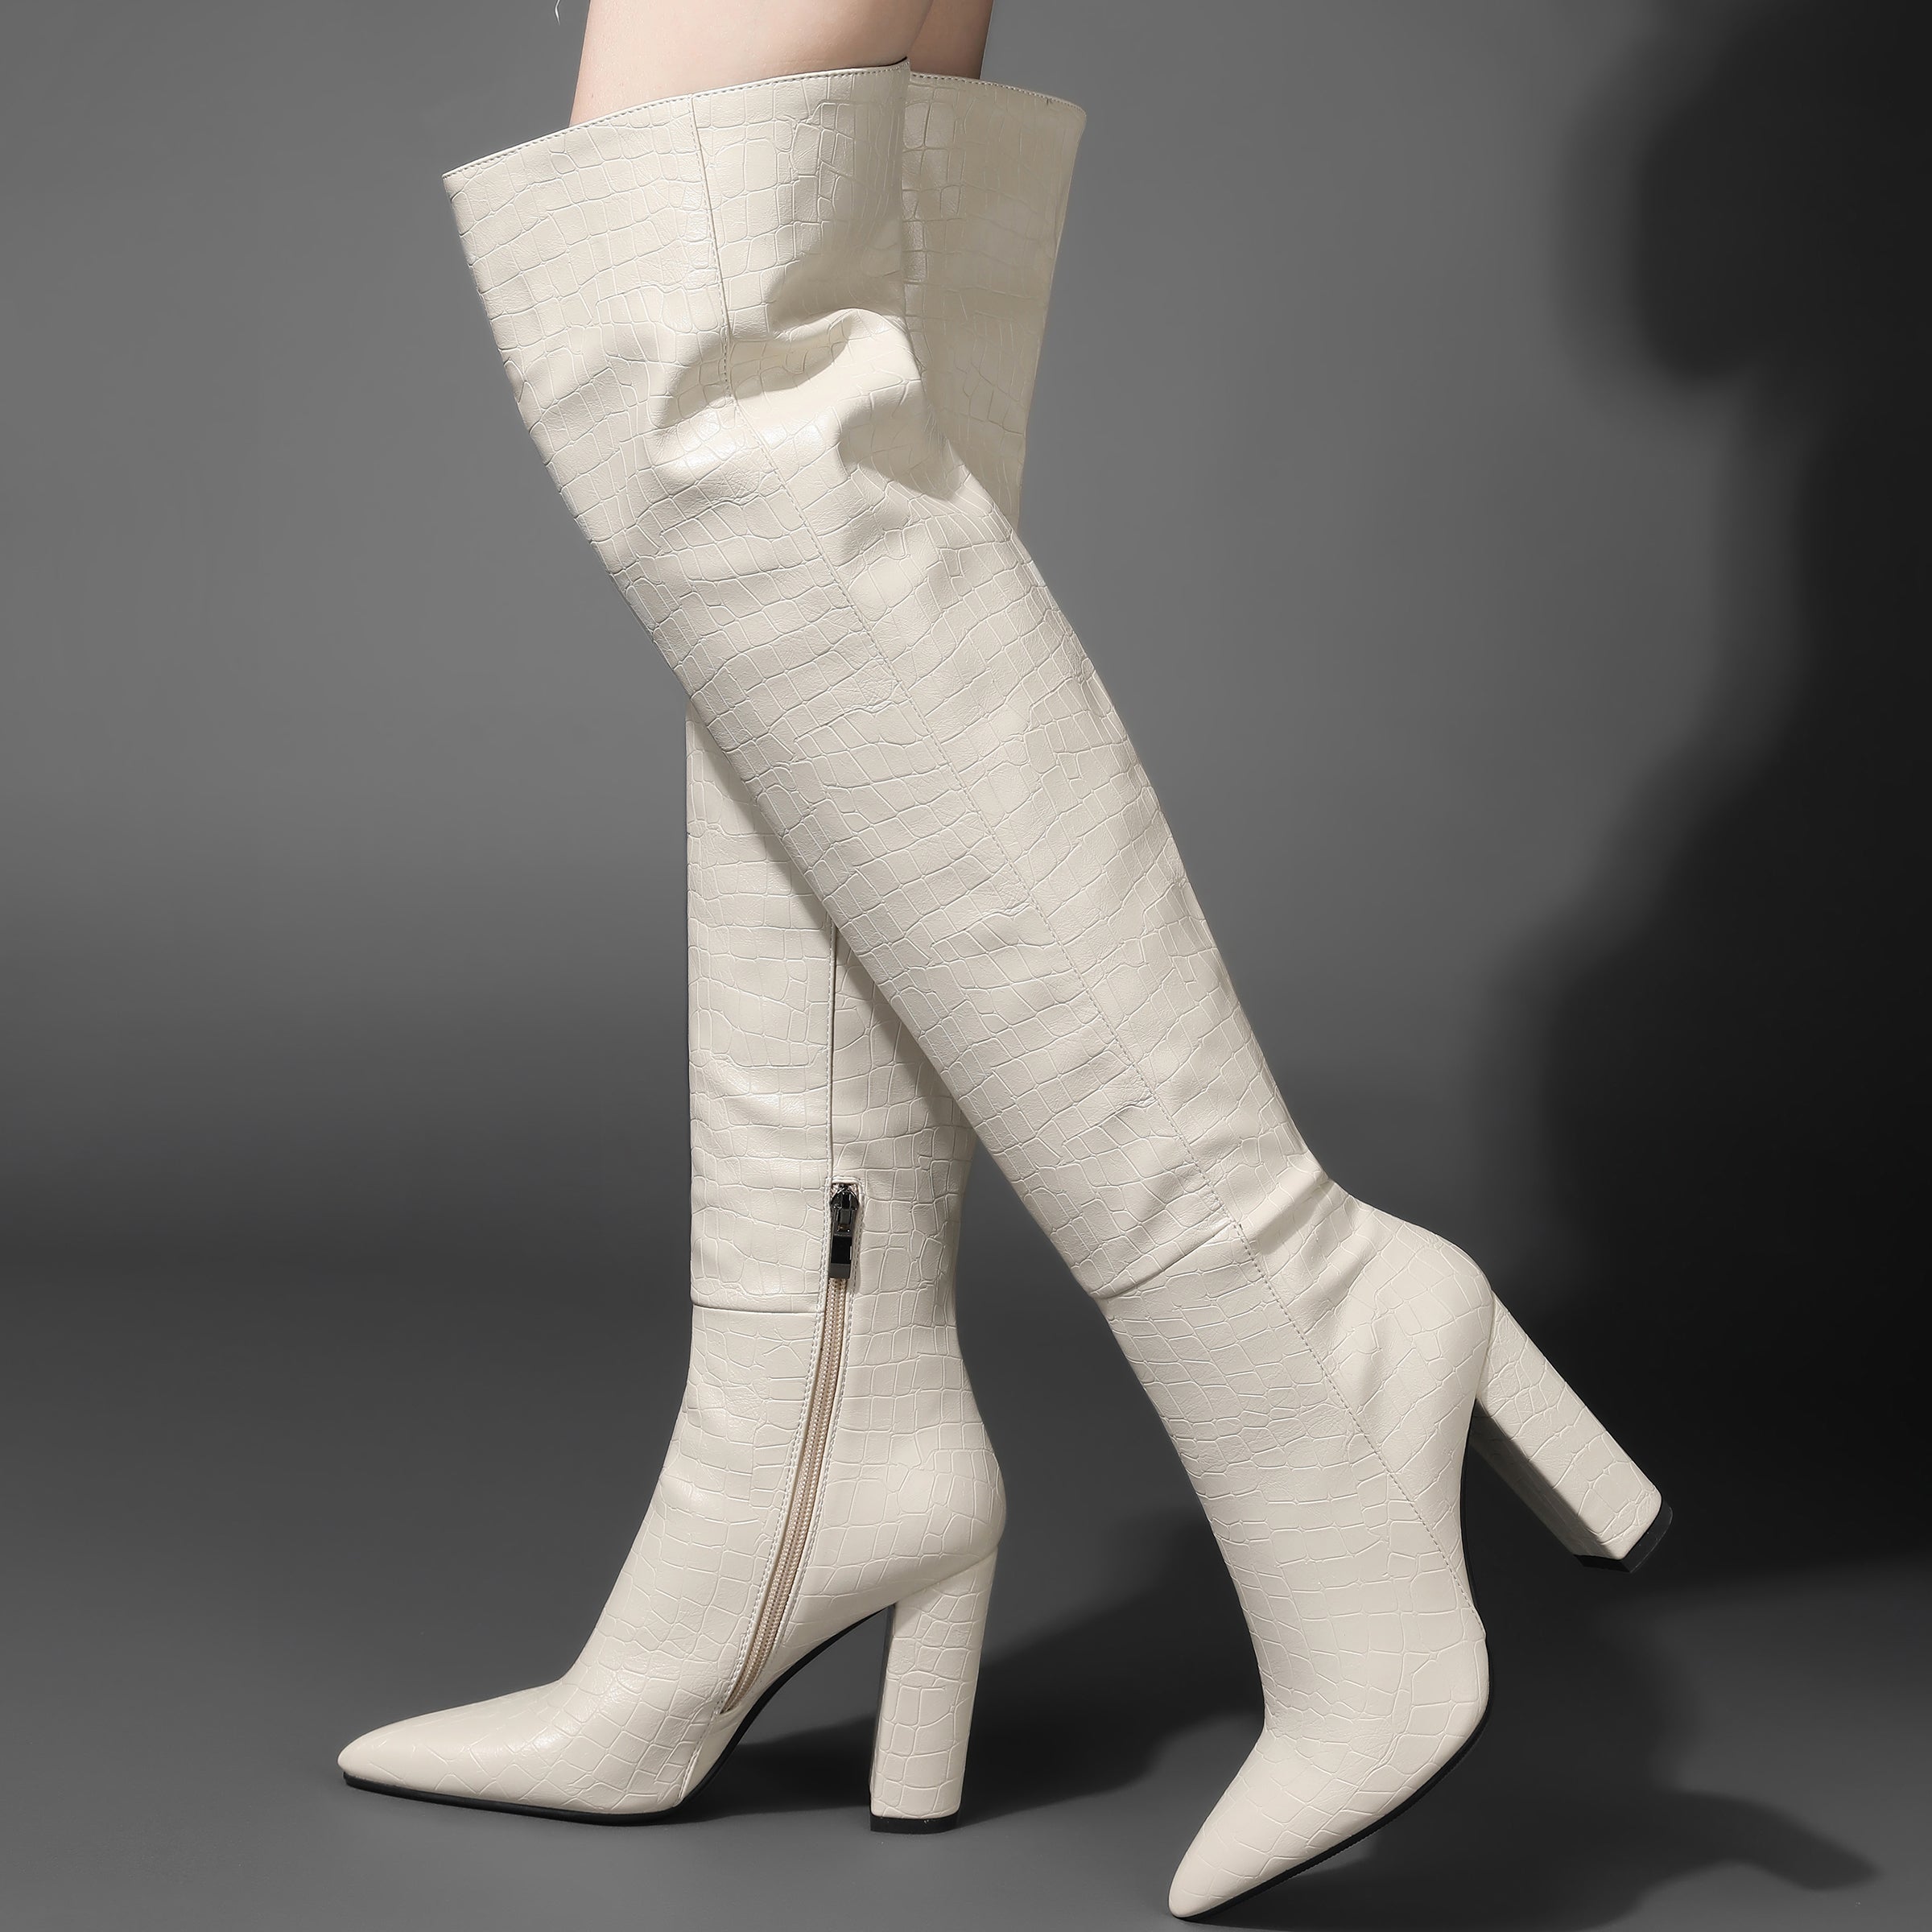 Bigsizeheels Embossed leather pointed toe chunky heel boots - White freeshipping - bigsizeheel®-size5-size15 -All Plus Sizes Available!